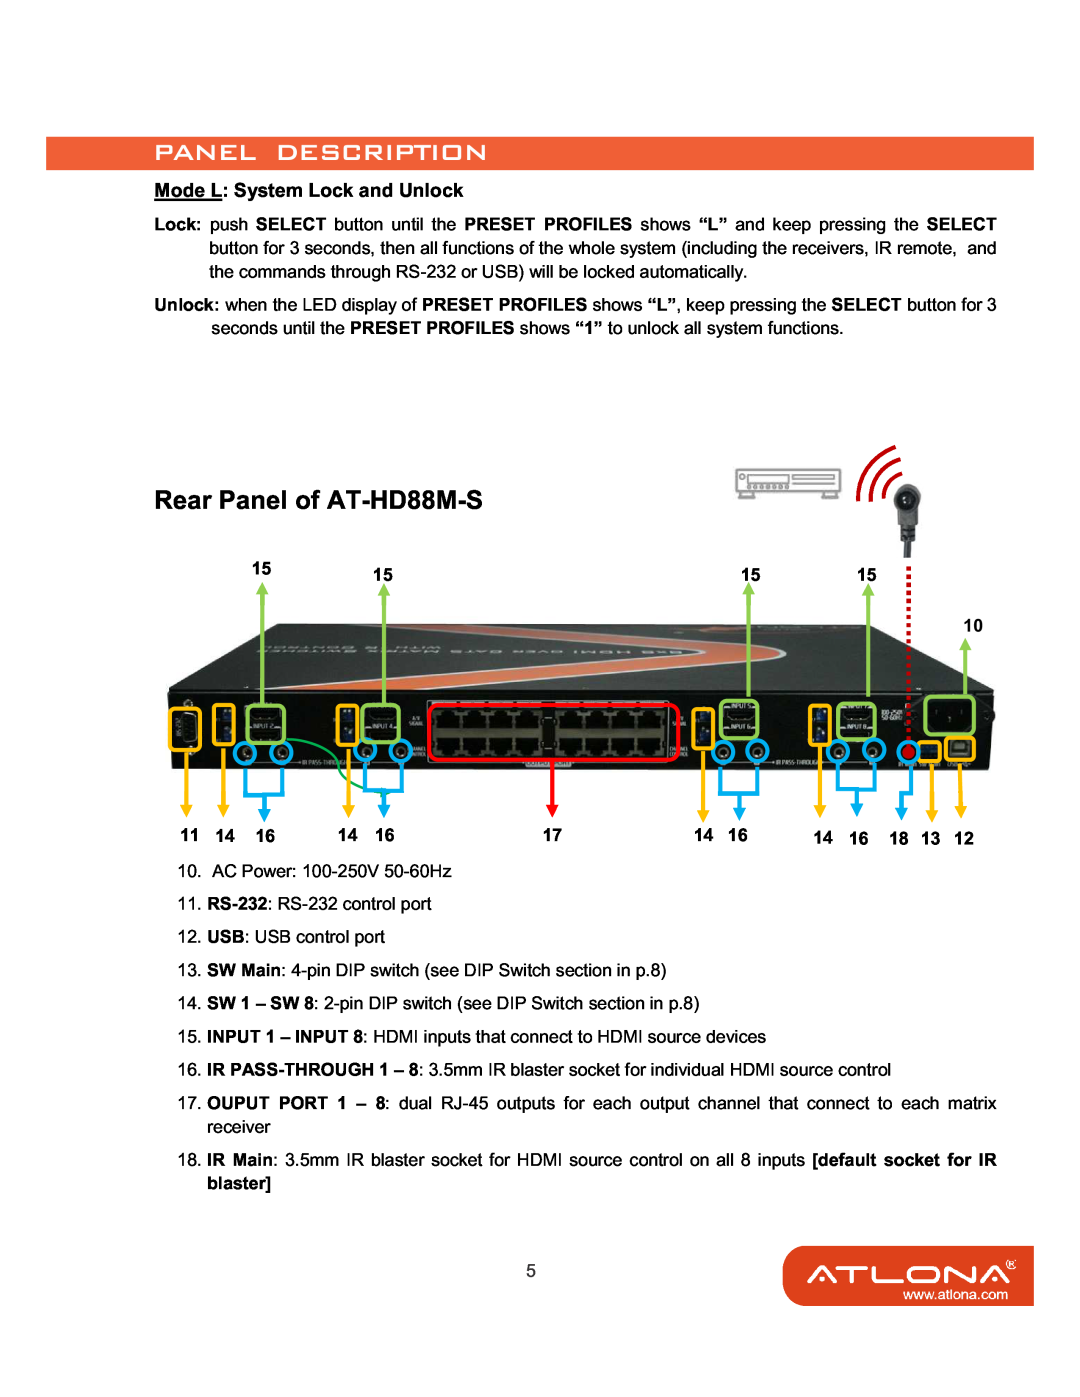 Atlona AT-HD88M-SR manual Rear Panel of AT-HD88M-S, Mode L System Lock and Unlock 